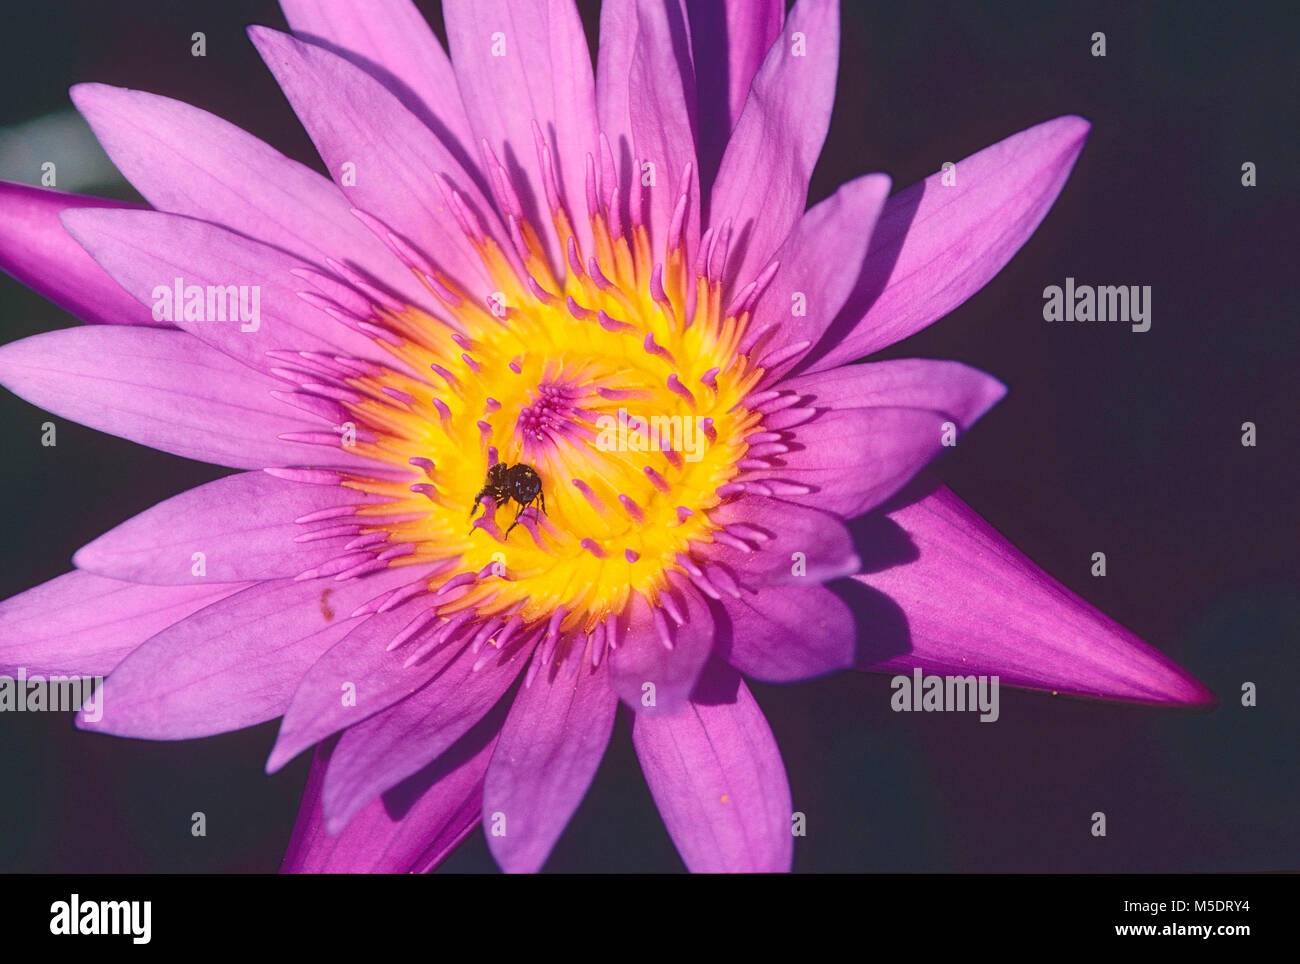 Star-lotus, Nymphaea nouchali, Nymphaceaceae, Water lily, Blüte, blühend, Blume, Pflanze, Bee, insect, Botanischer Garten, Singapore Stock Photo